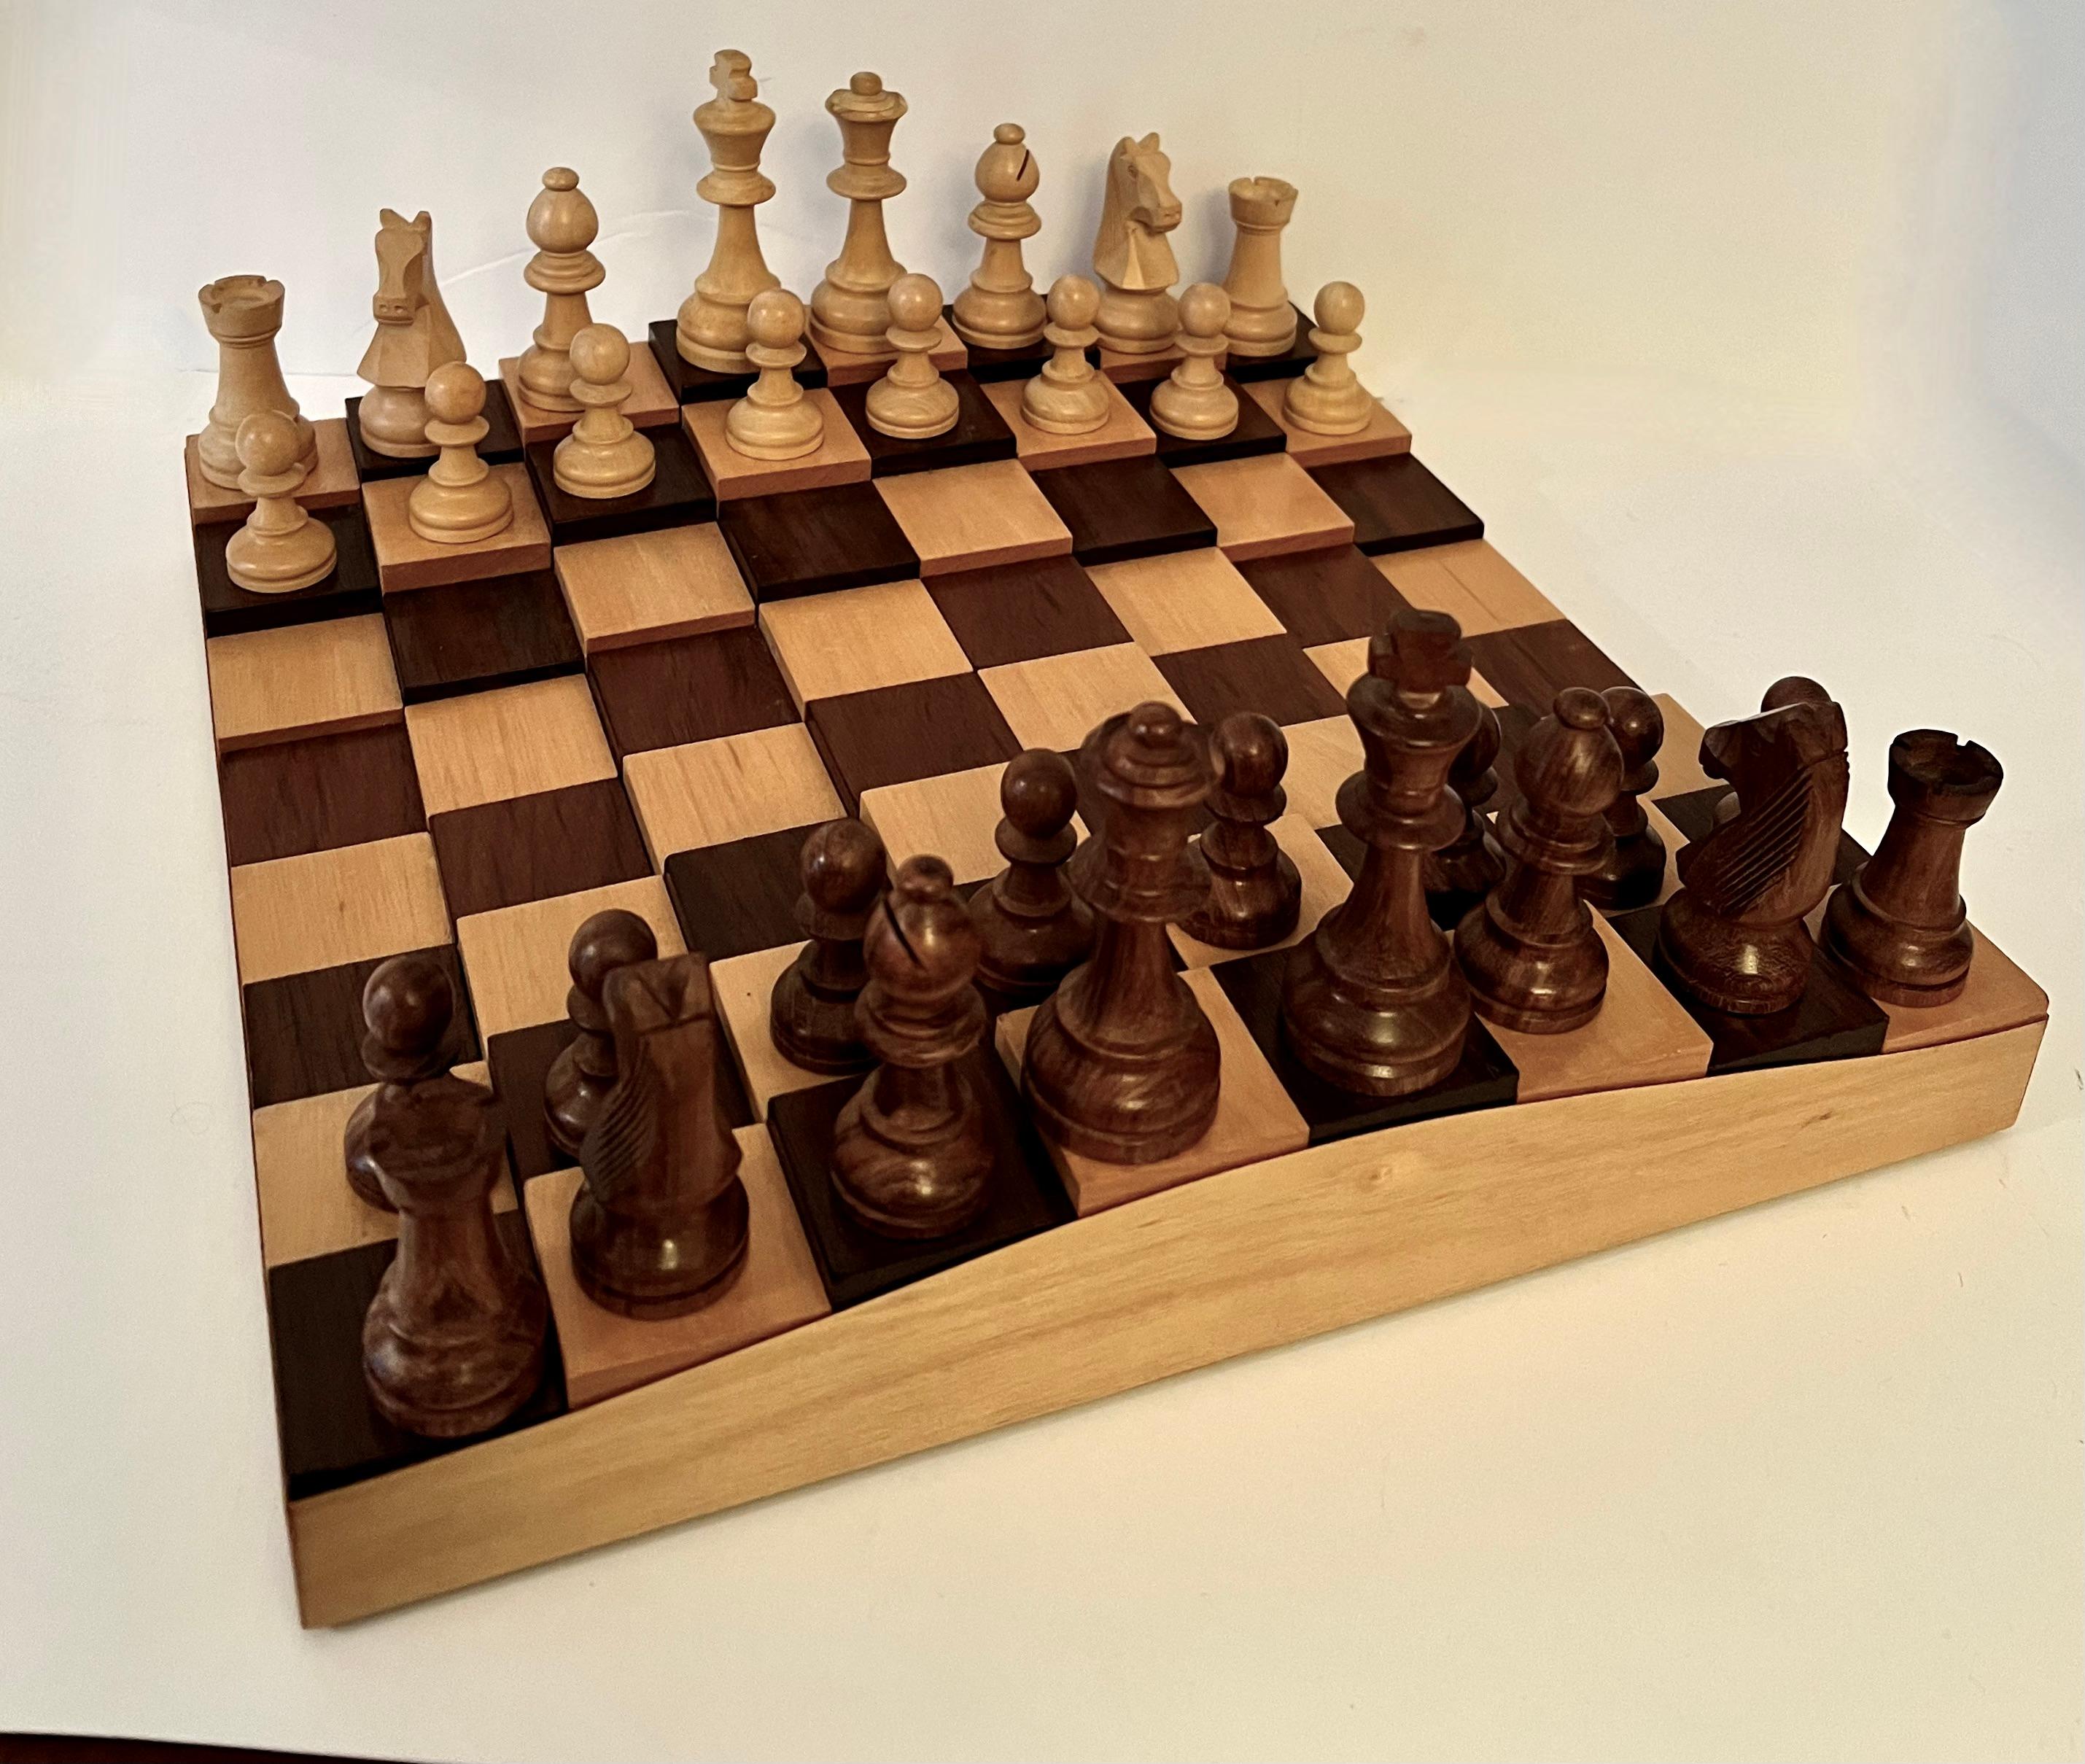 3 dimensional chess